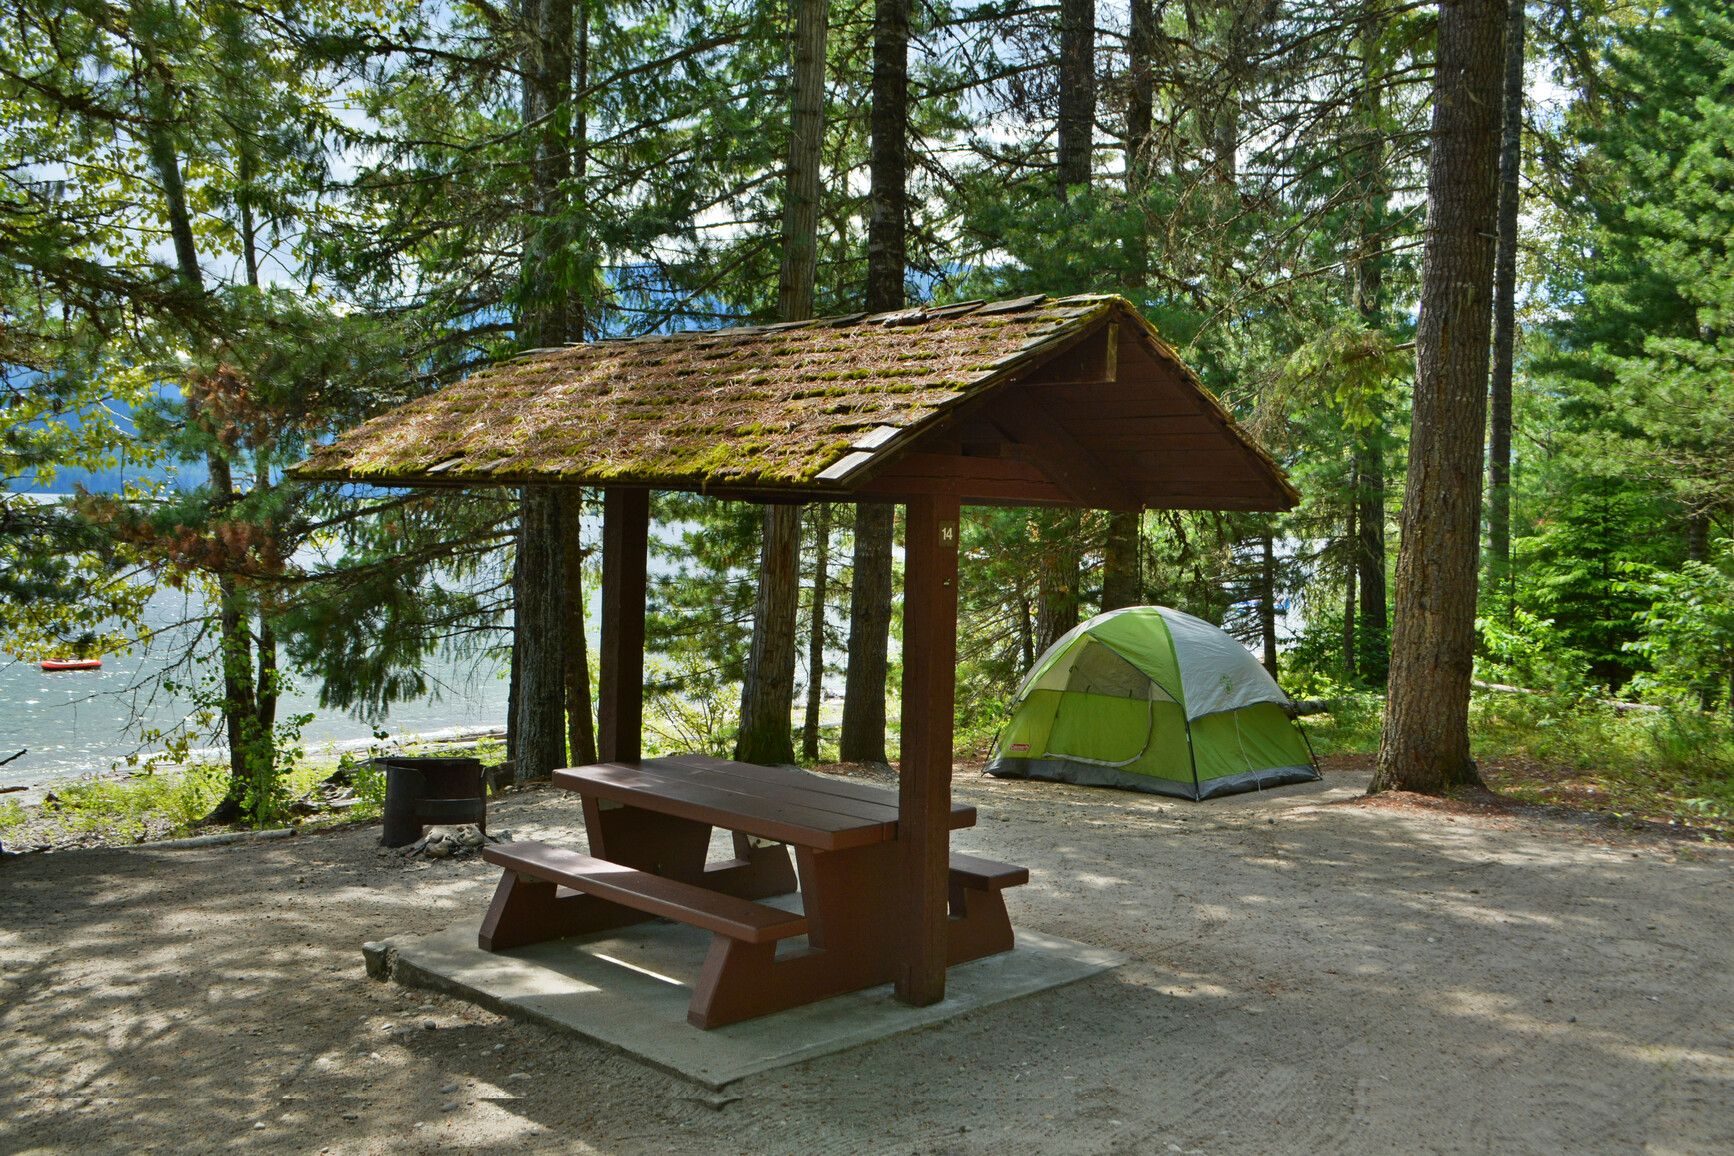 A campsite at Shuswap Lake. Silver Beach Park.